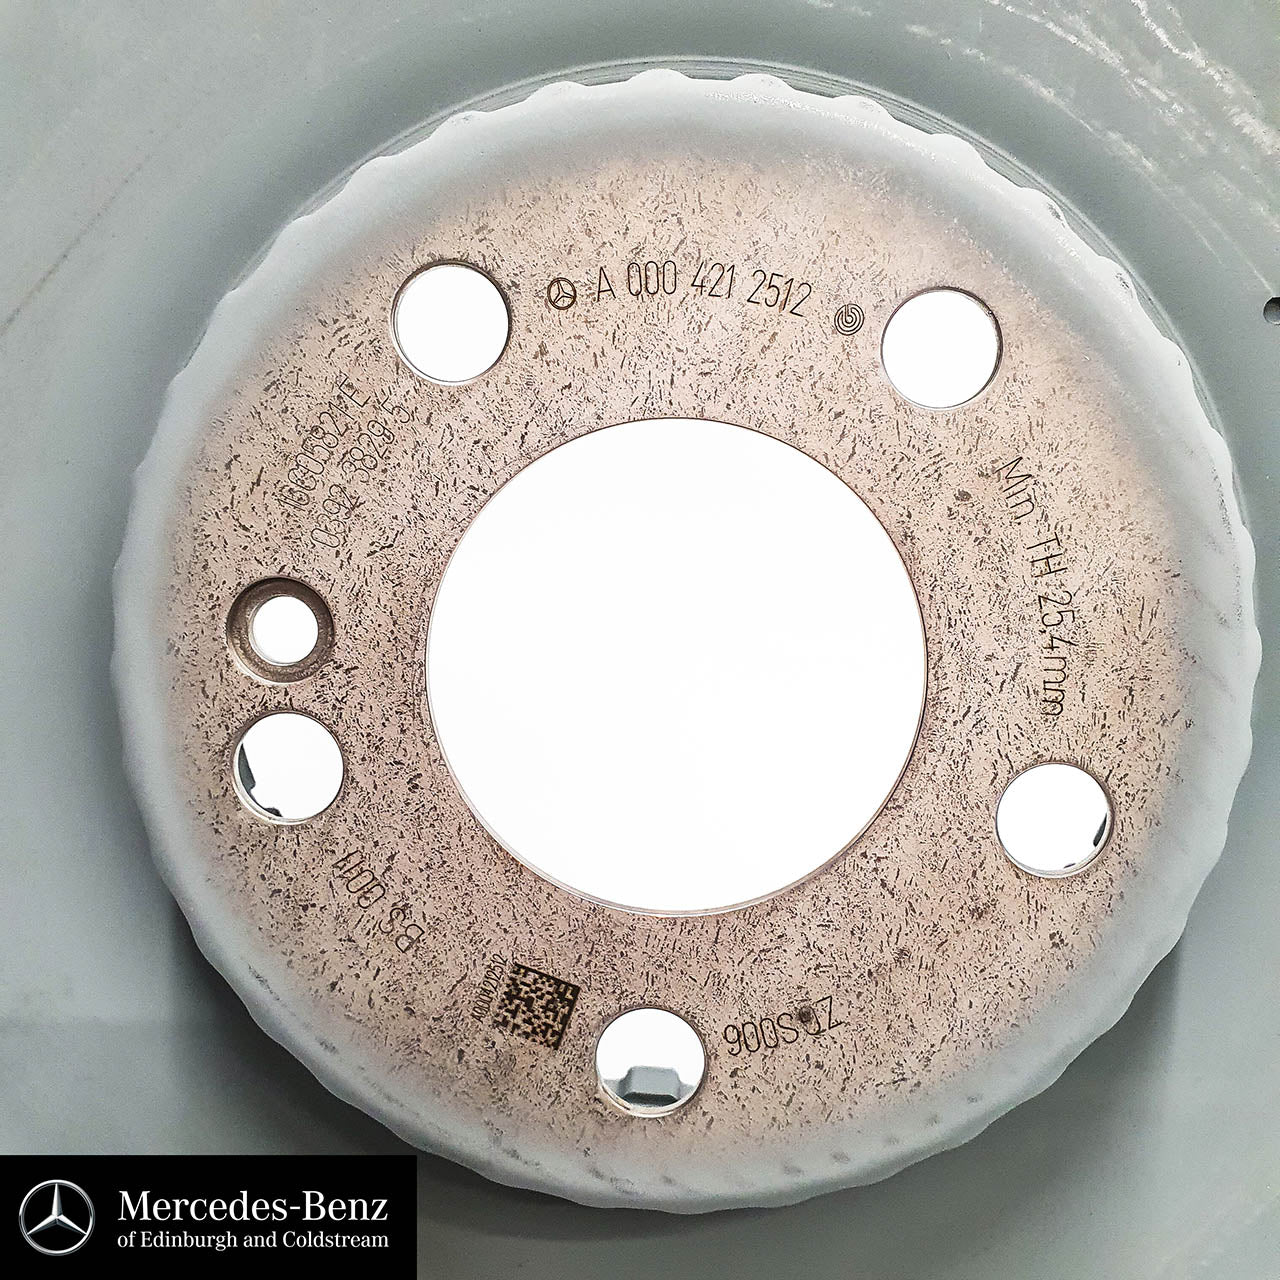 Genuine Mercedes-Benz brake pad & disc set - Front - C Class 205, E Class 213 model series